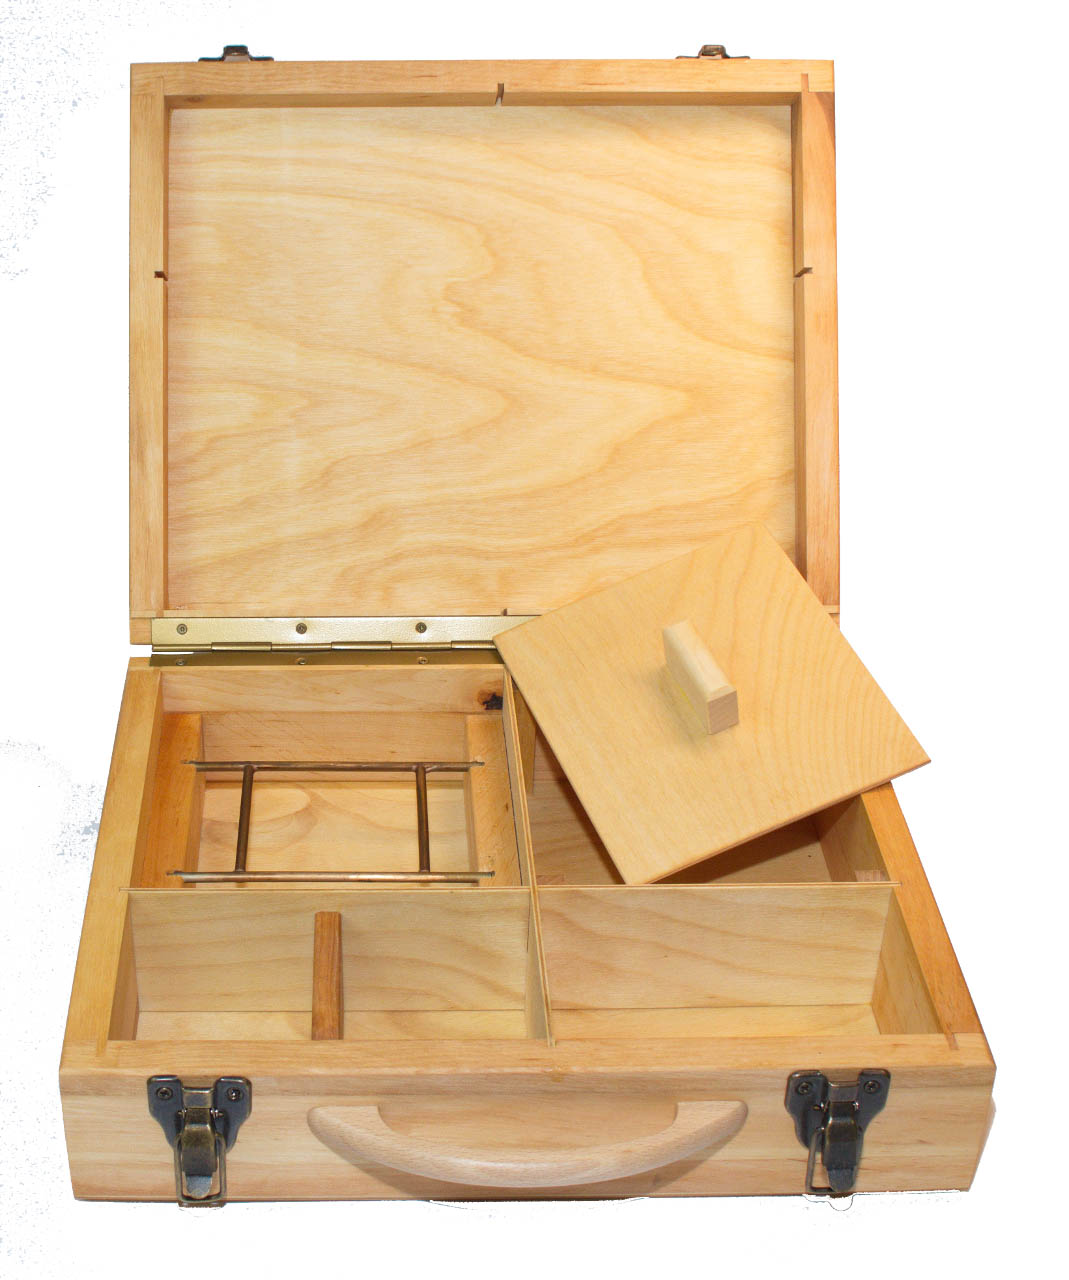 Agnihotra-Koffer aus Holz